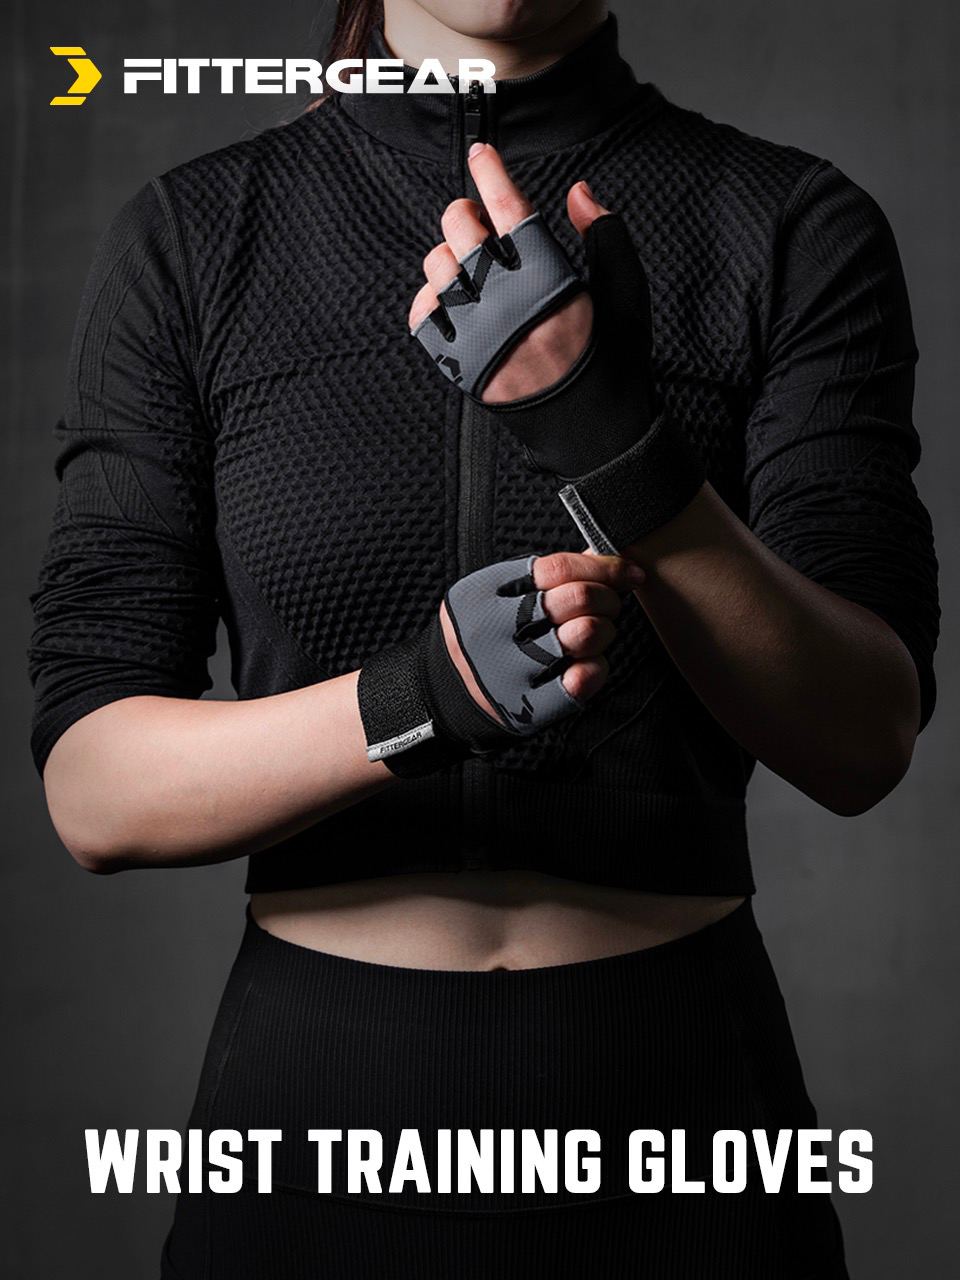 A. Wrist Training Gloves - Female